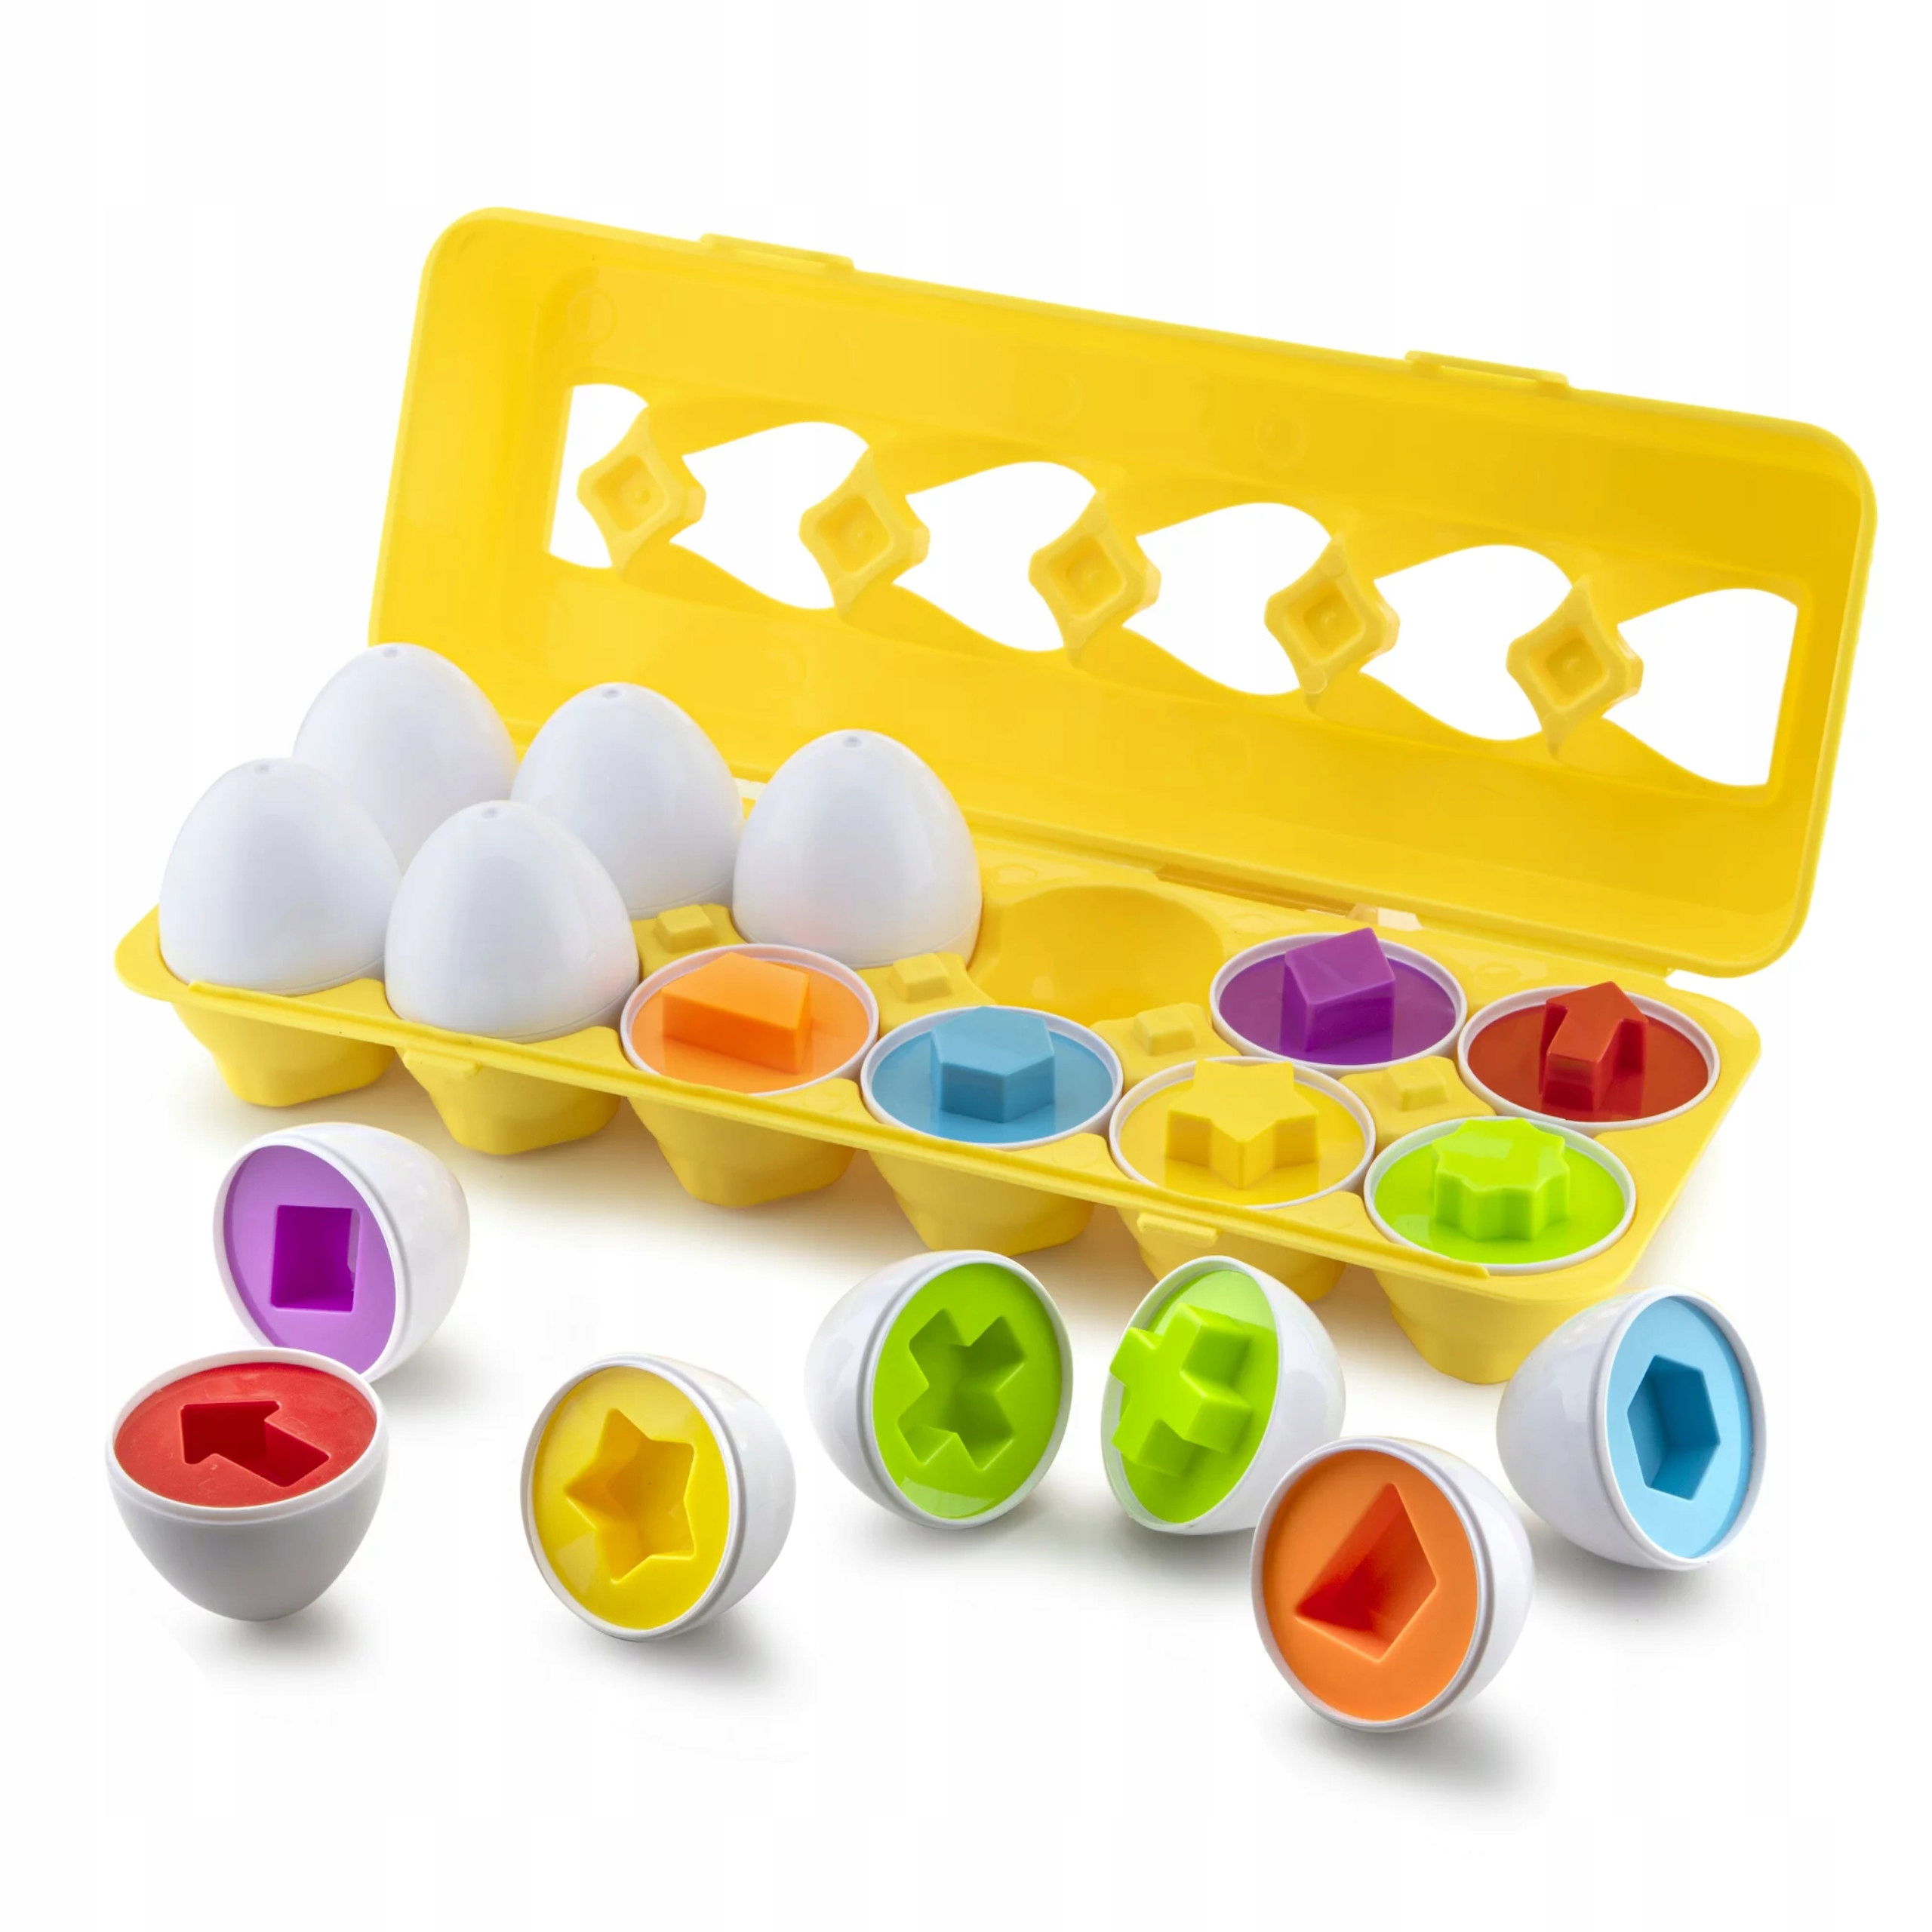 Układanka sorter jajka Montessori kształty LB33-3 Materiał plastik